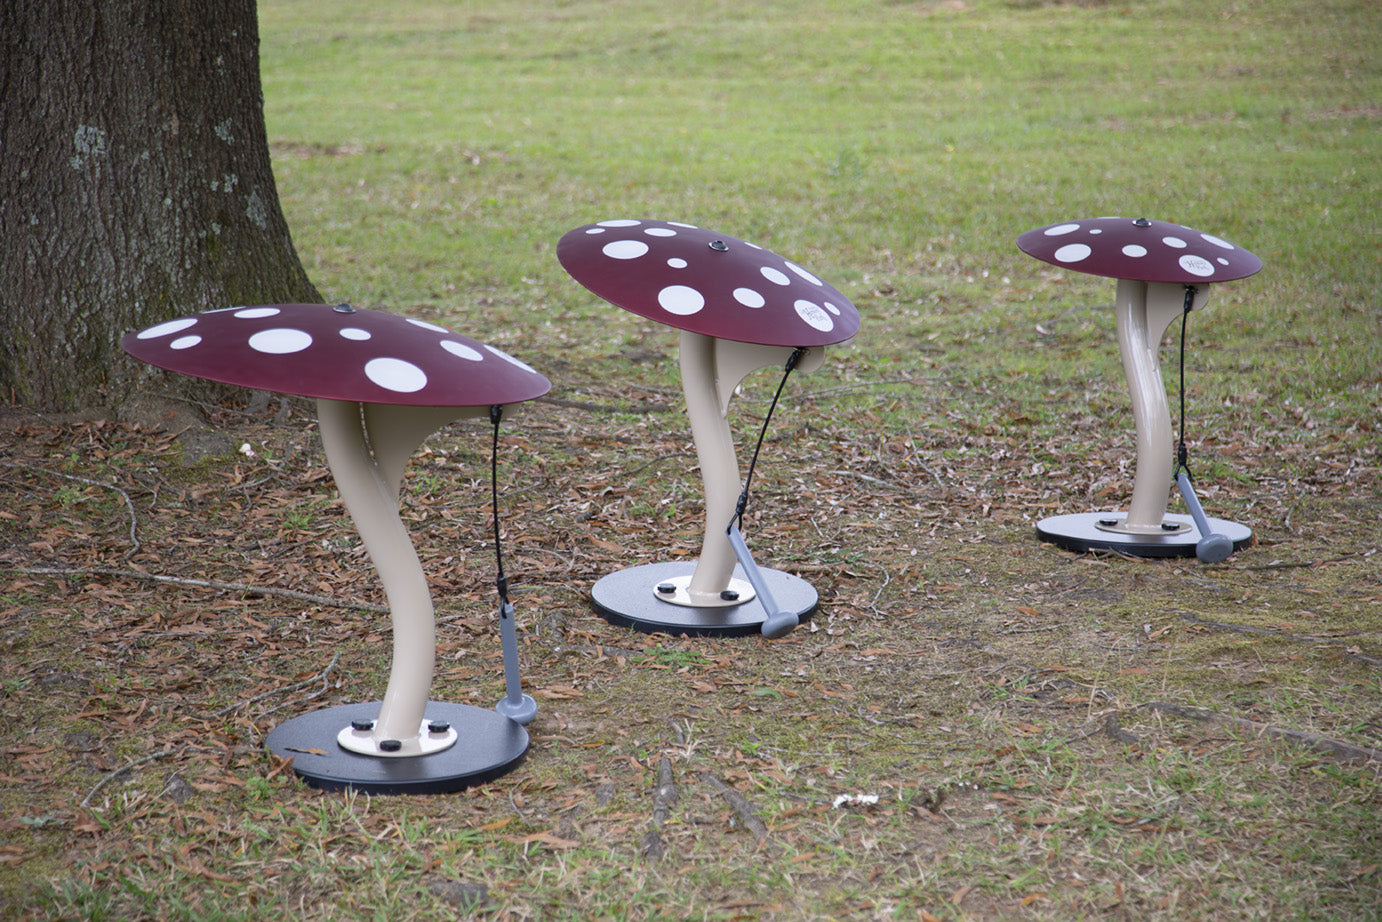 Mushrooms Ensemble Musical Park Instruments - Freenotes Harmony Park